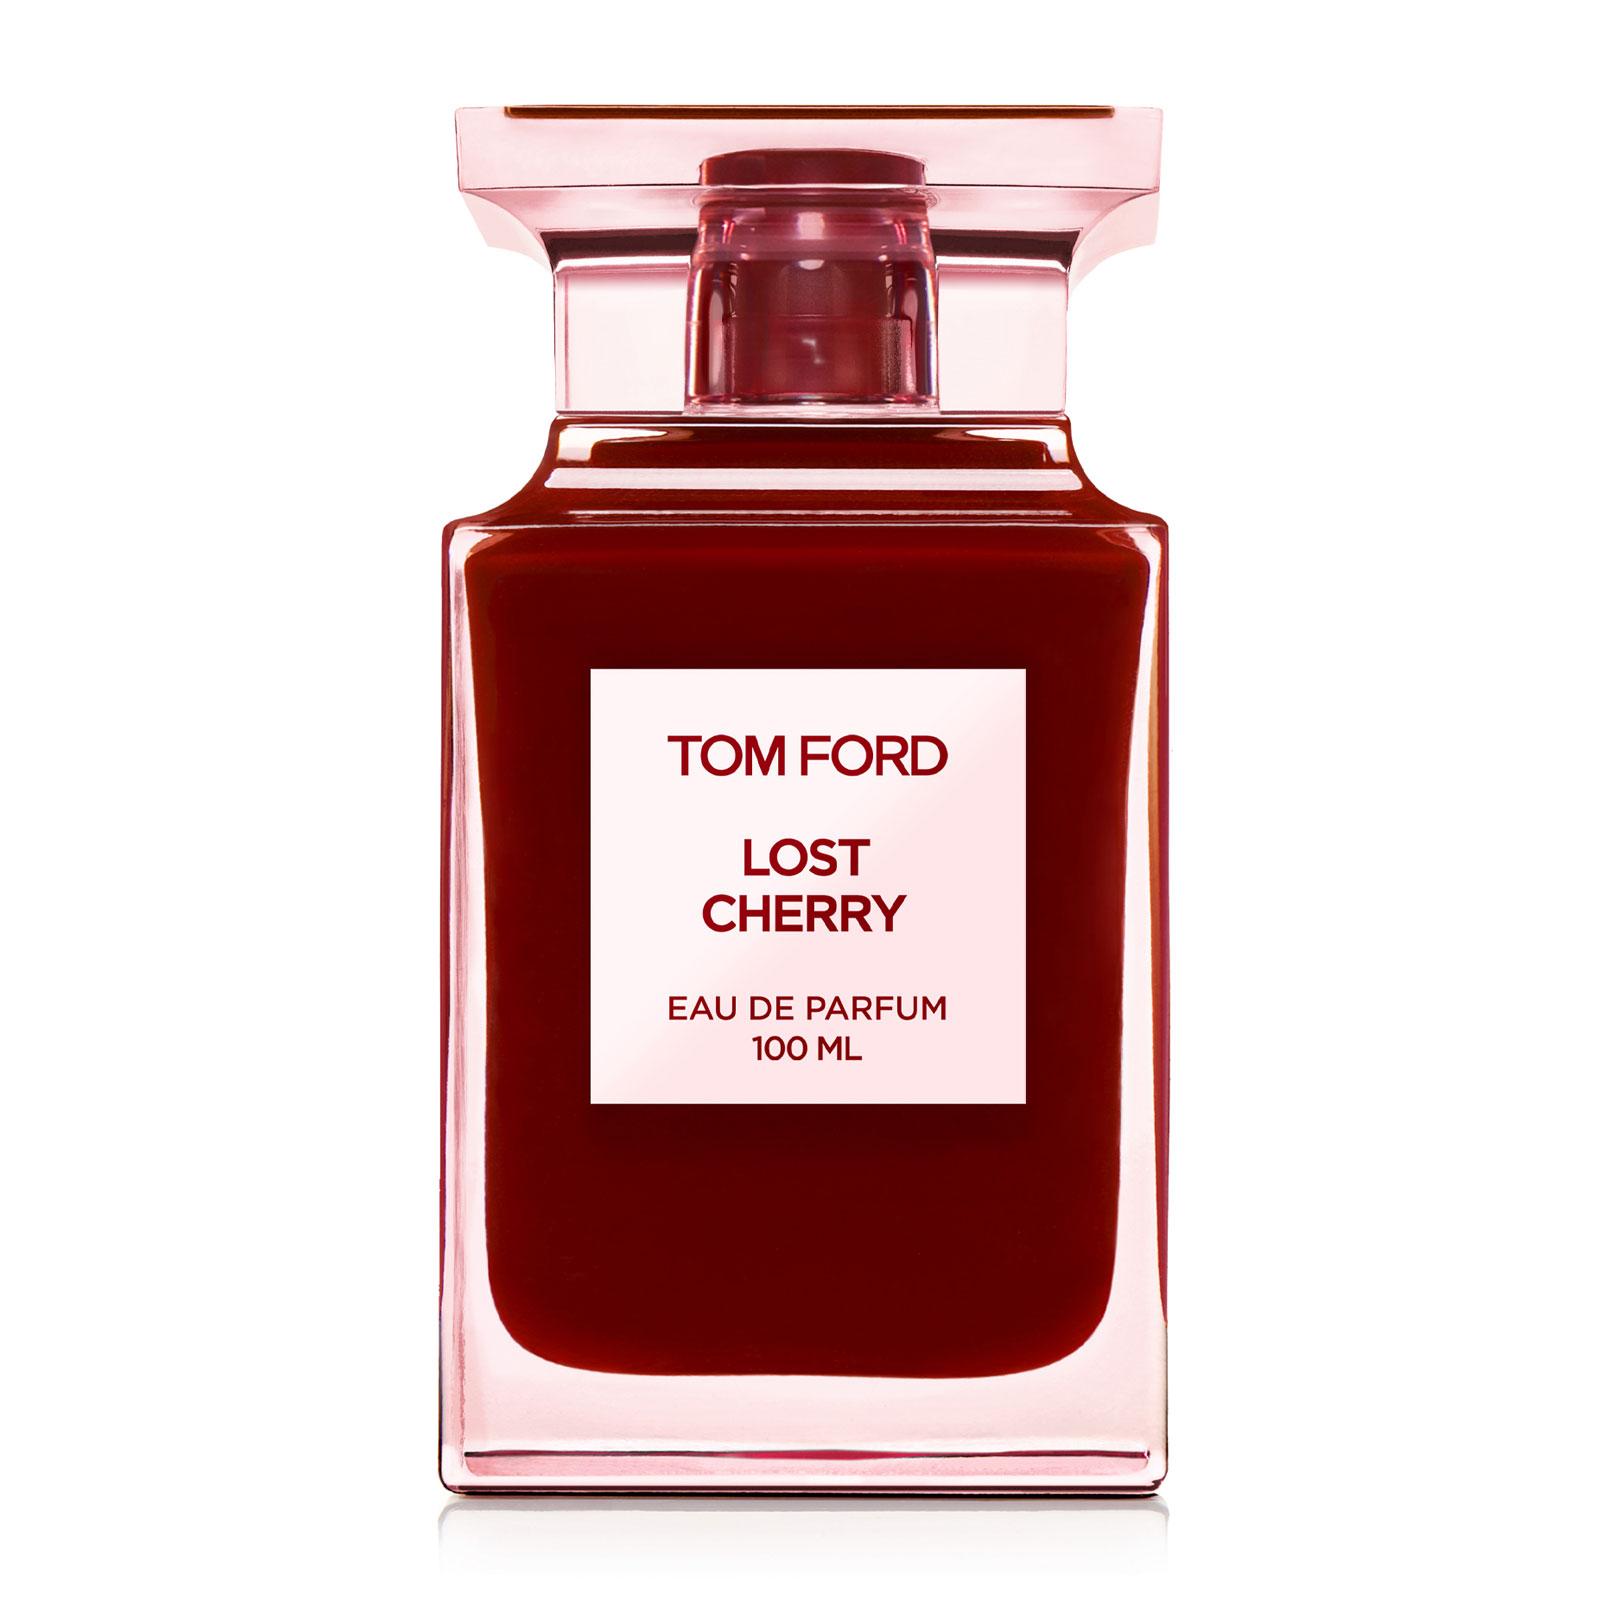 Tom Ford Lost Cherry Eau de Parfum 100ml | FEELUNIQUE